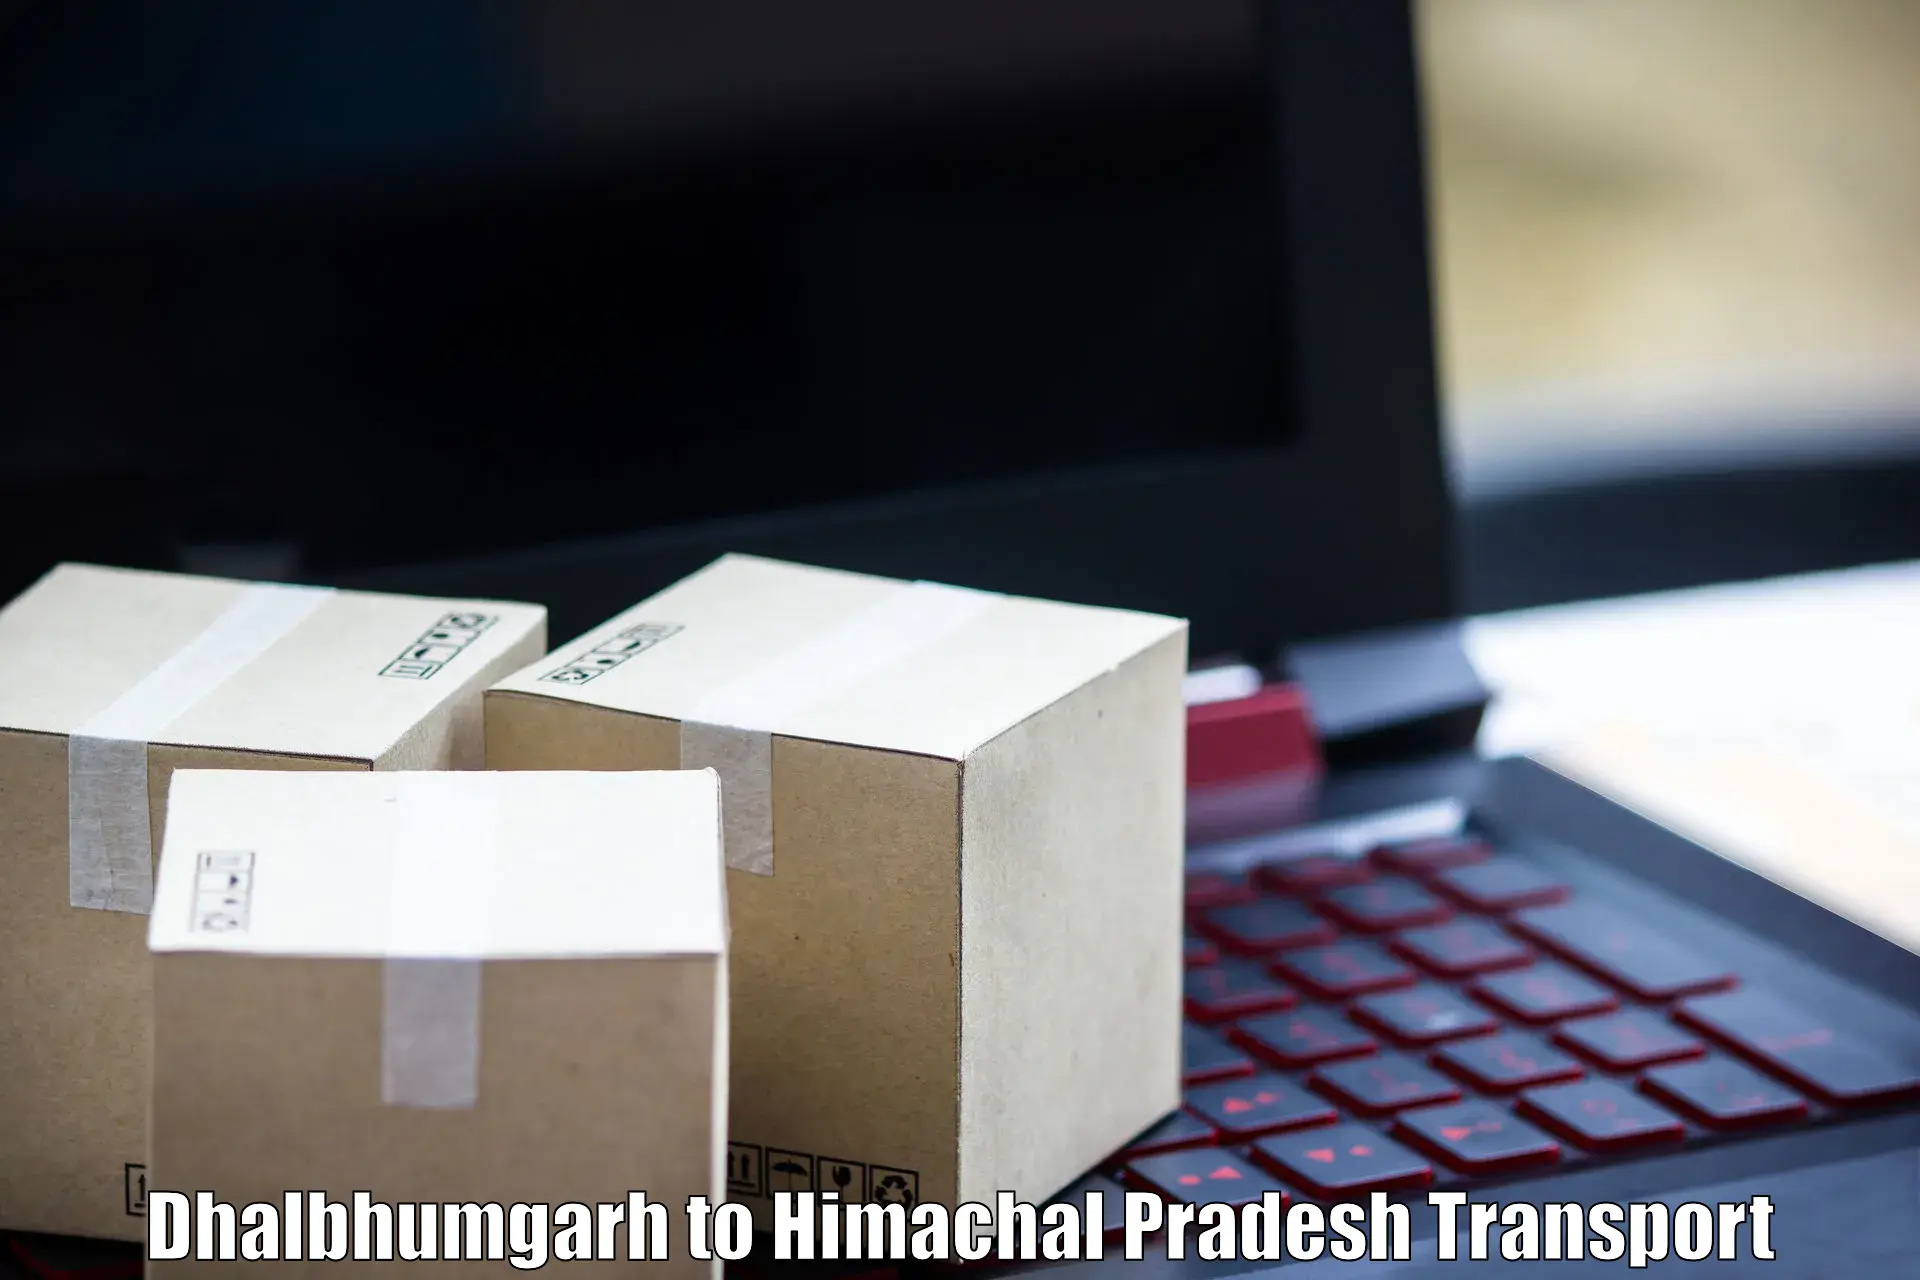 Pick up transport service Dhalbhumgarh to Ghumarwin